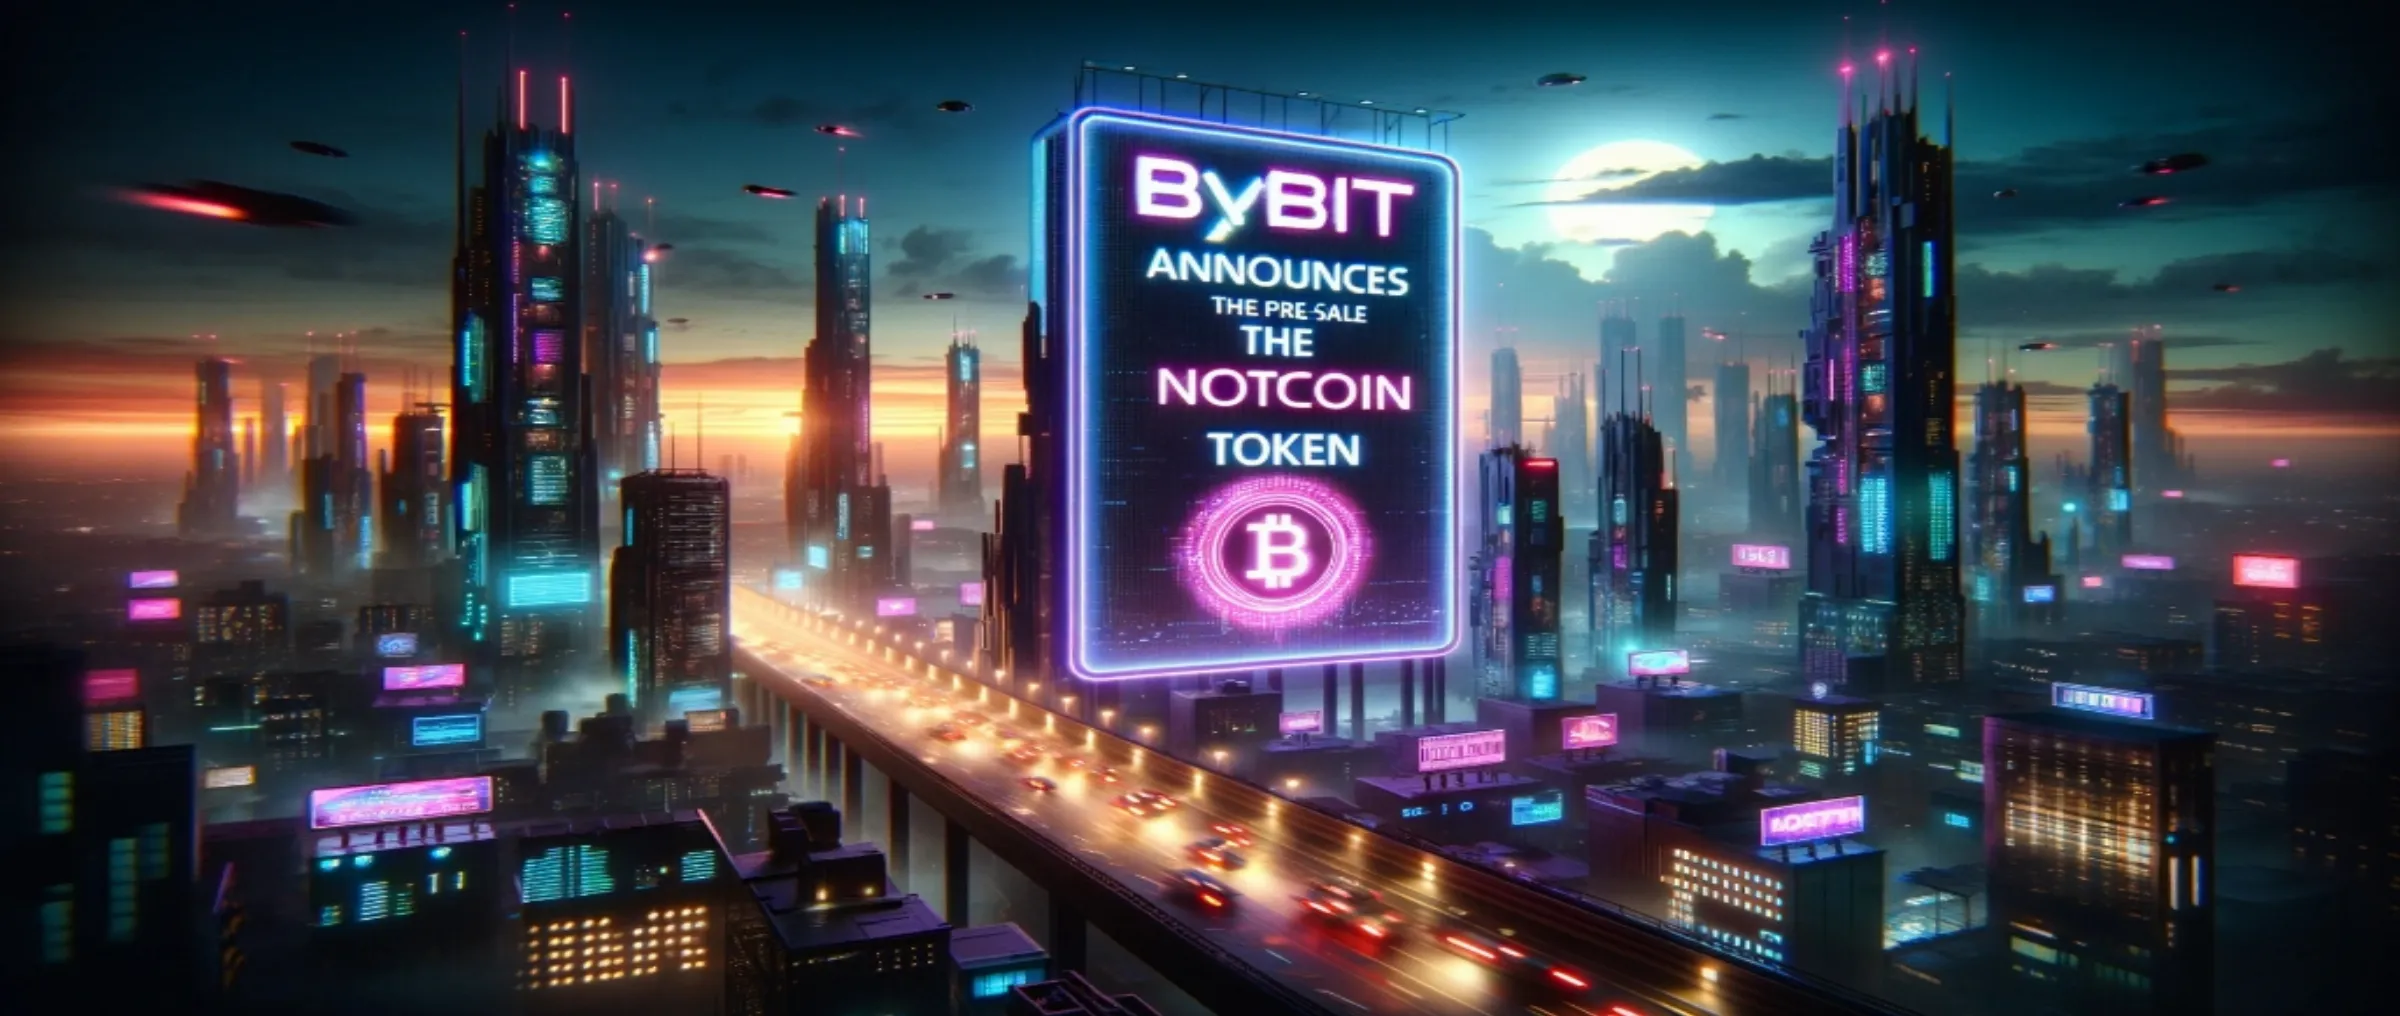 Bybit начала предварительную продажу токена Notcoin